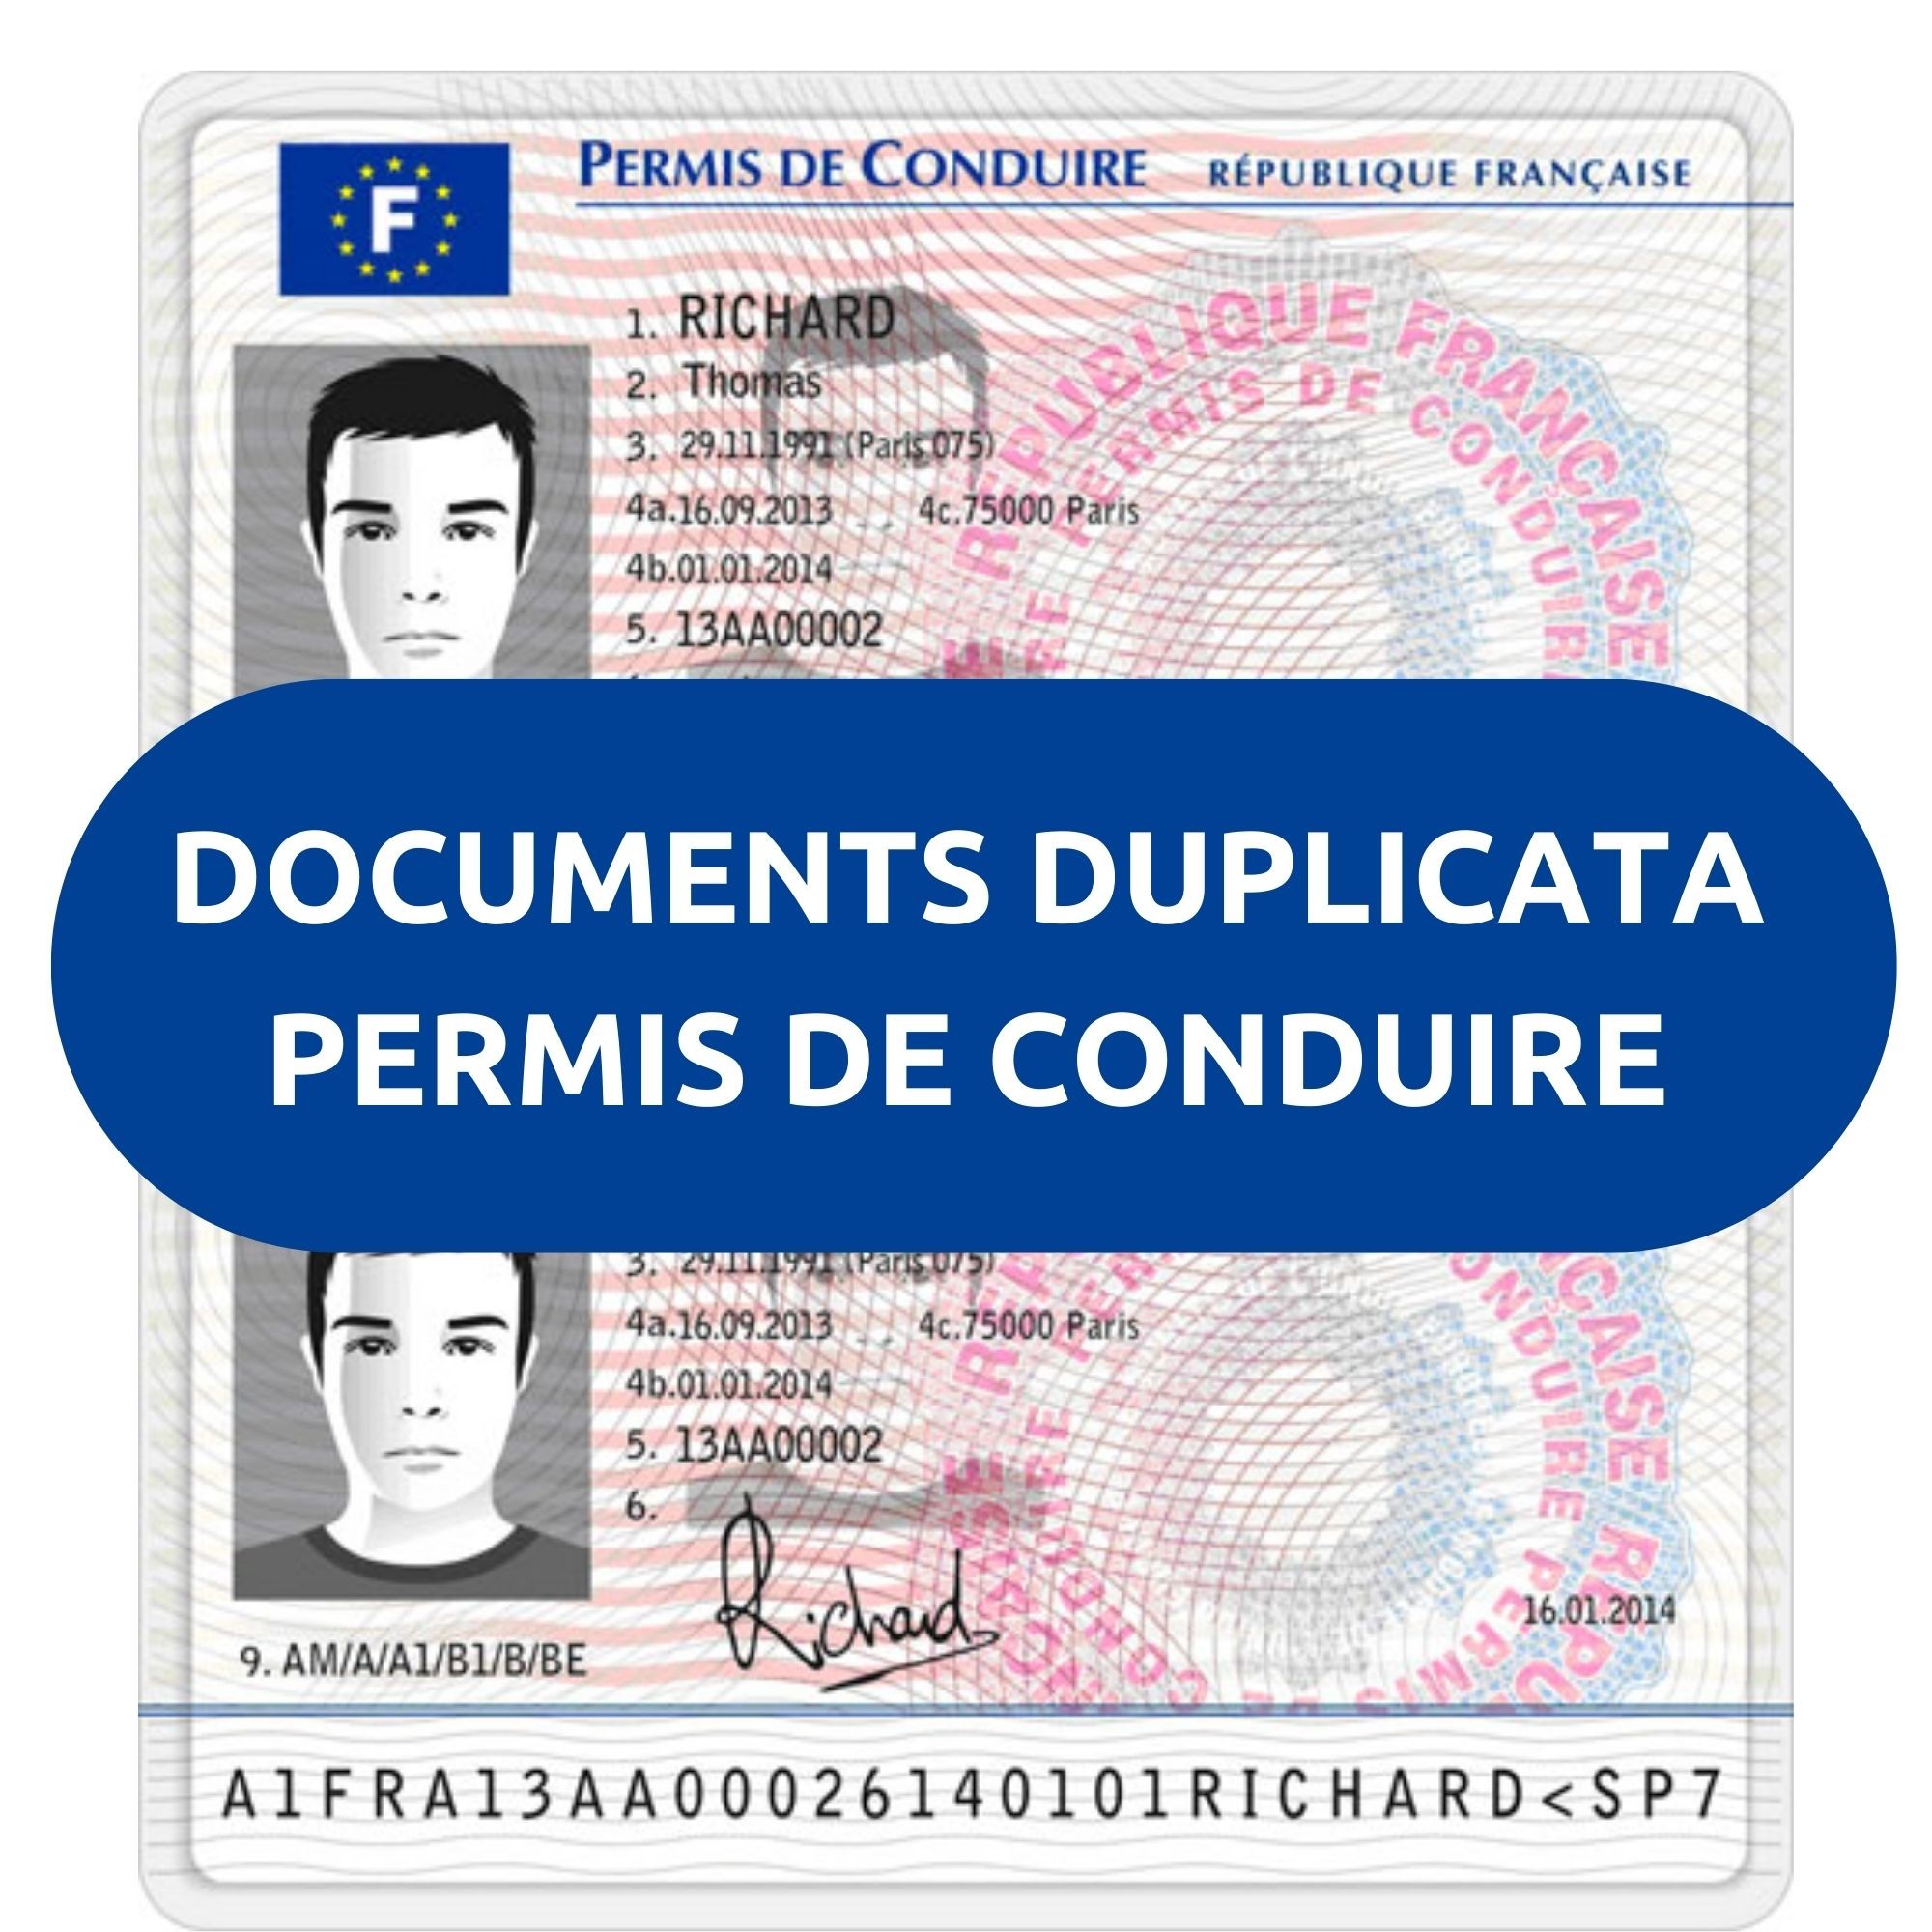 Documents duplicata permis de conduire